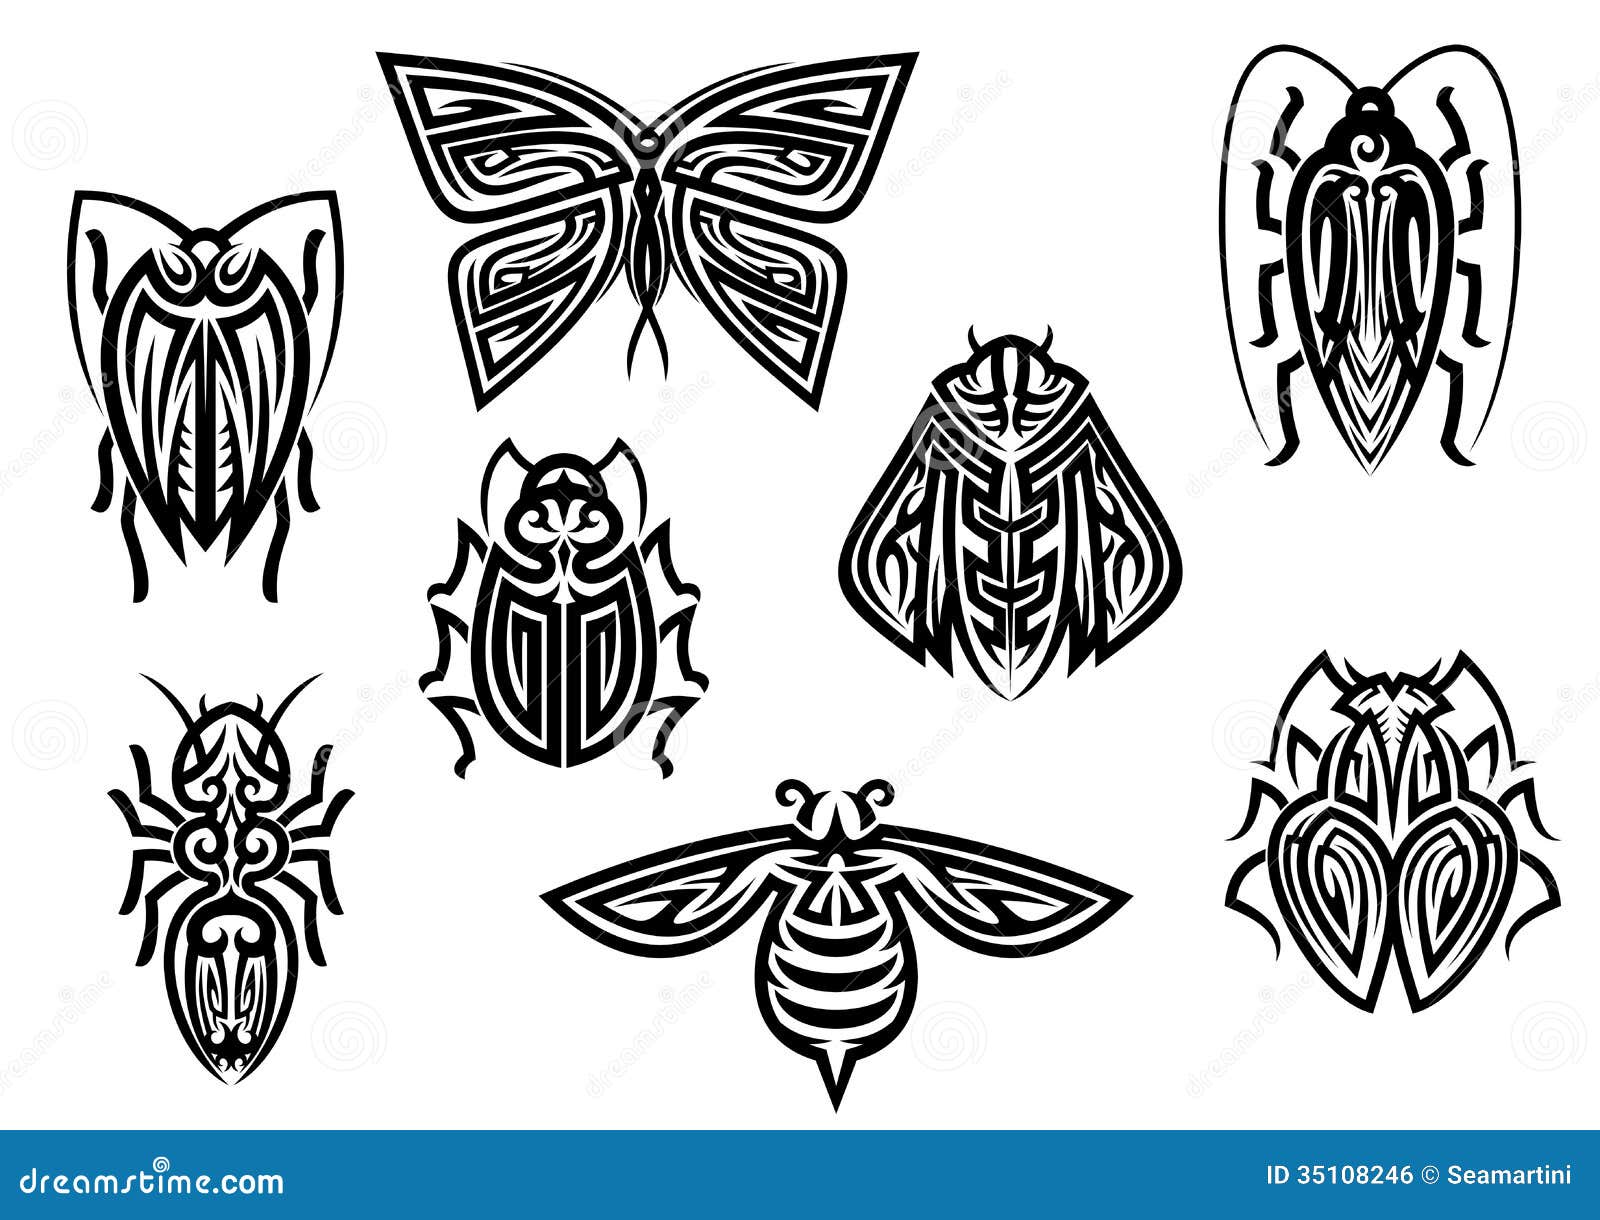 Ladybug Tattoo Design AAF-08522 | TattooJohnny.com